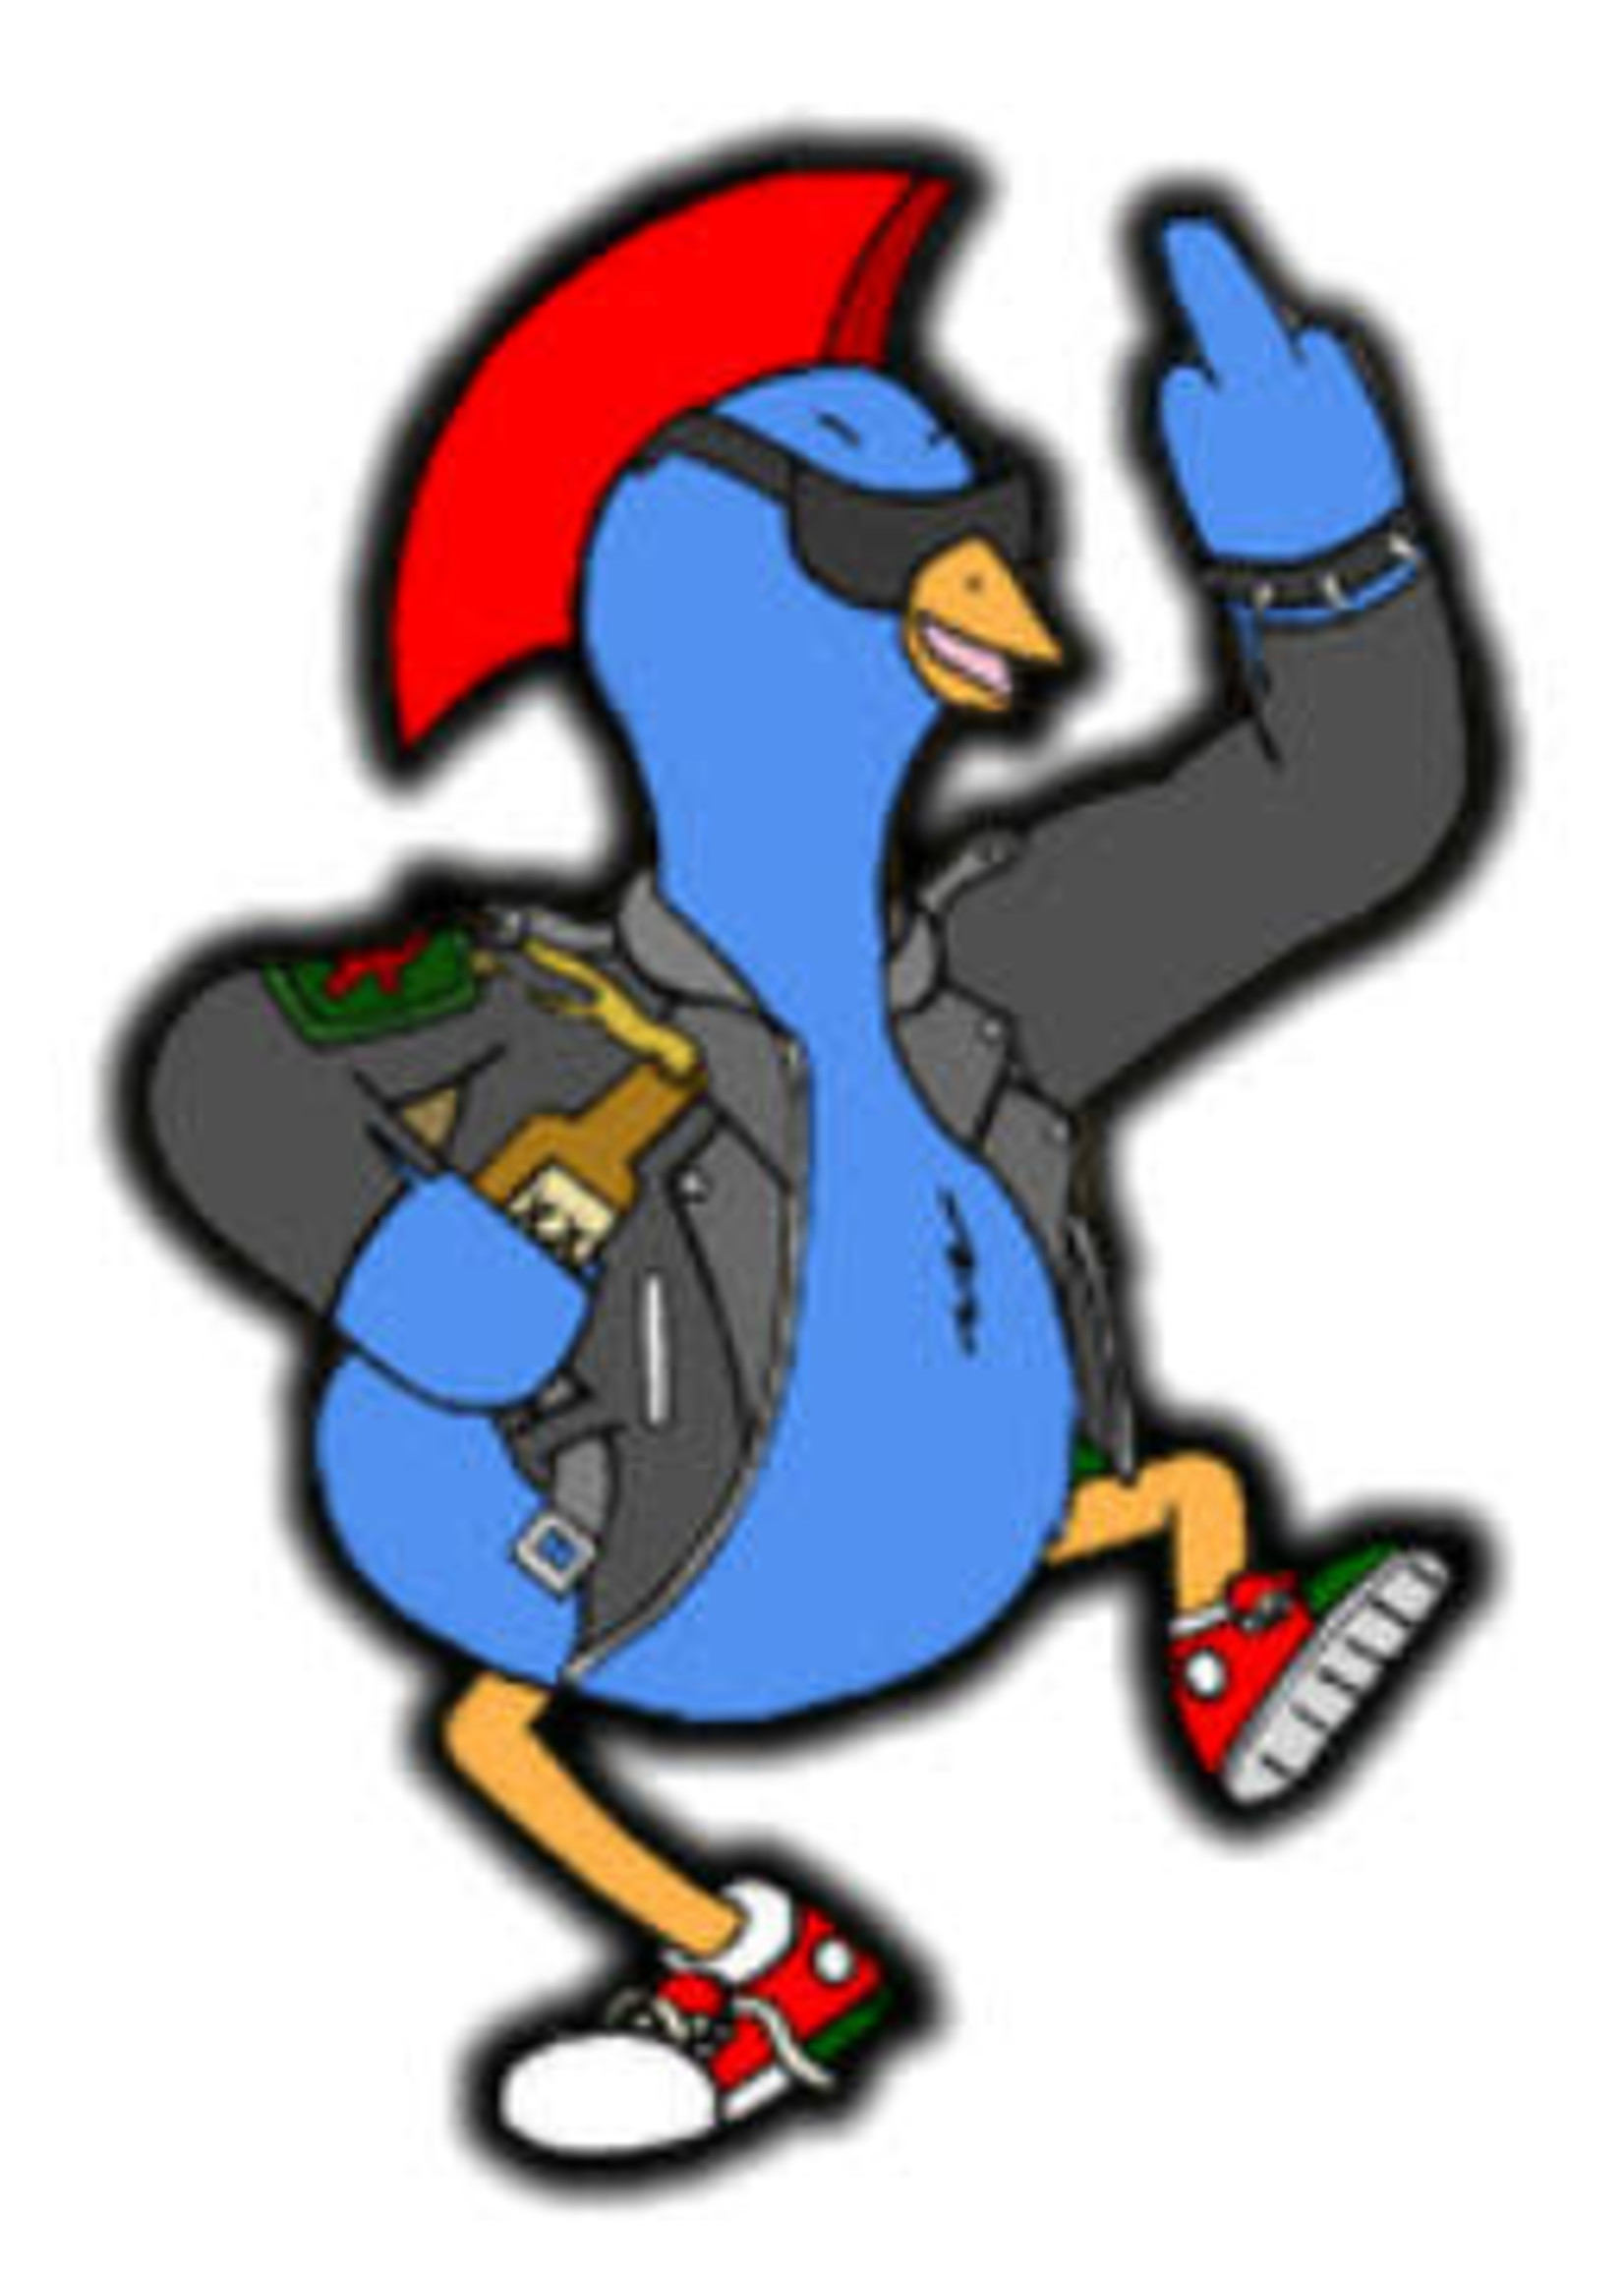 ichiban games Peacock Block Expansion (Nsfw) AKA The Dirty Bird